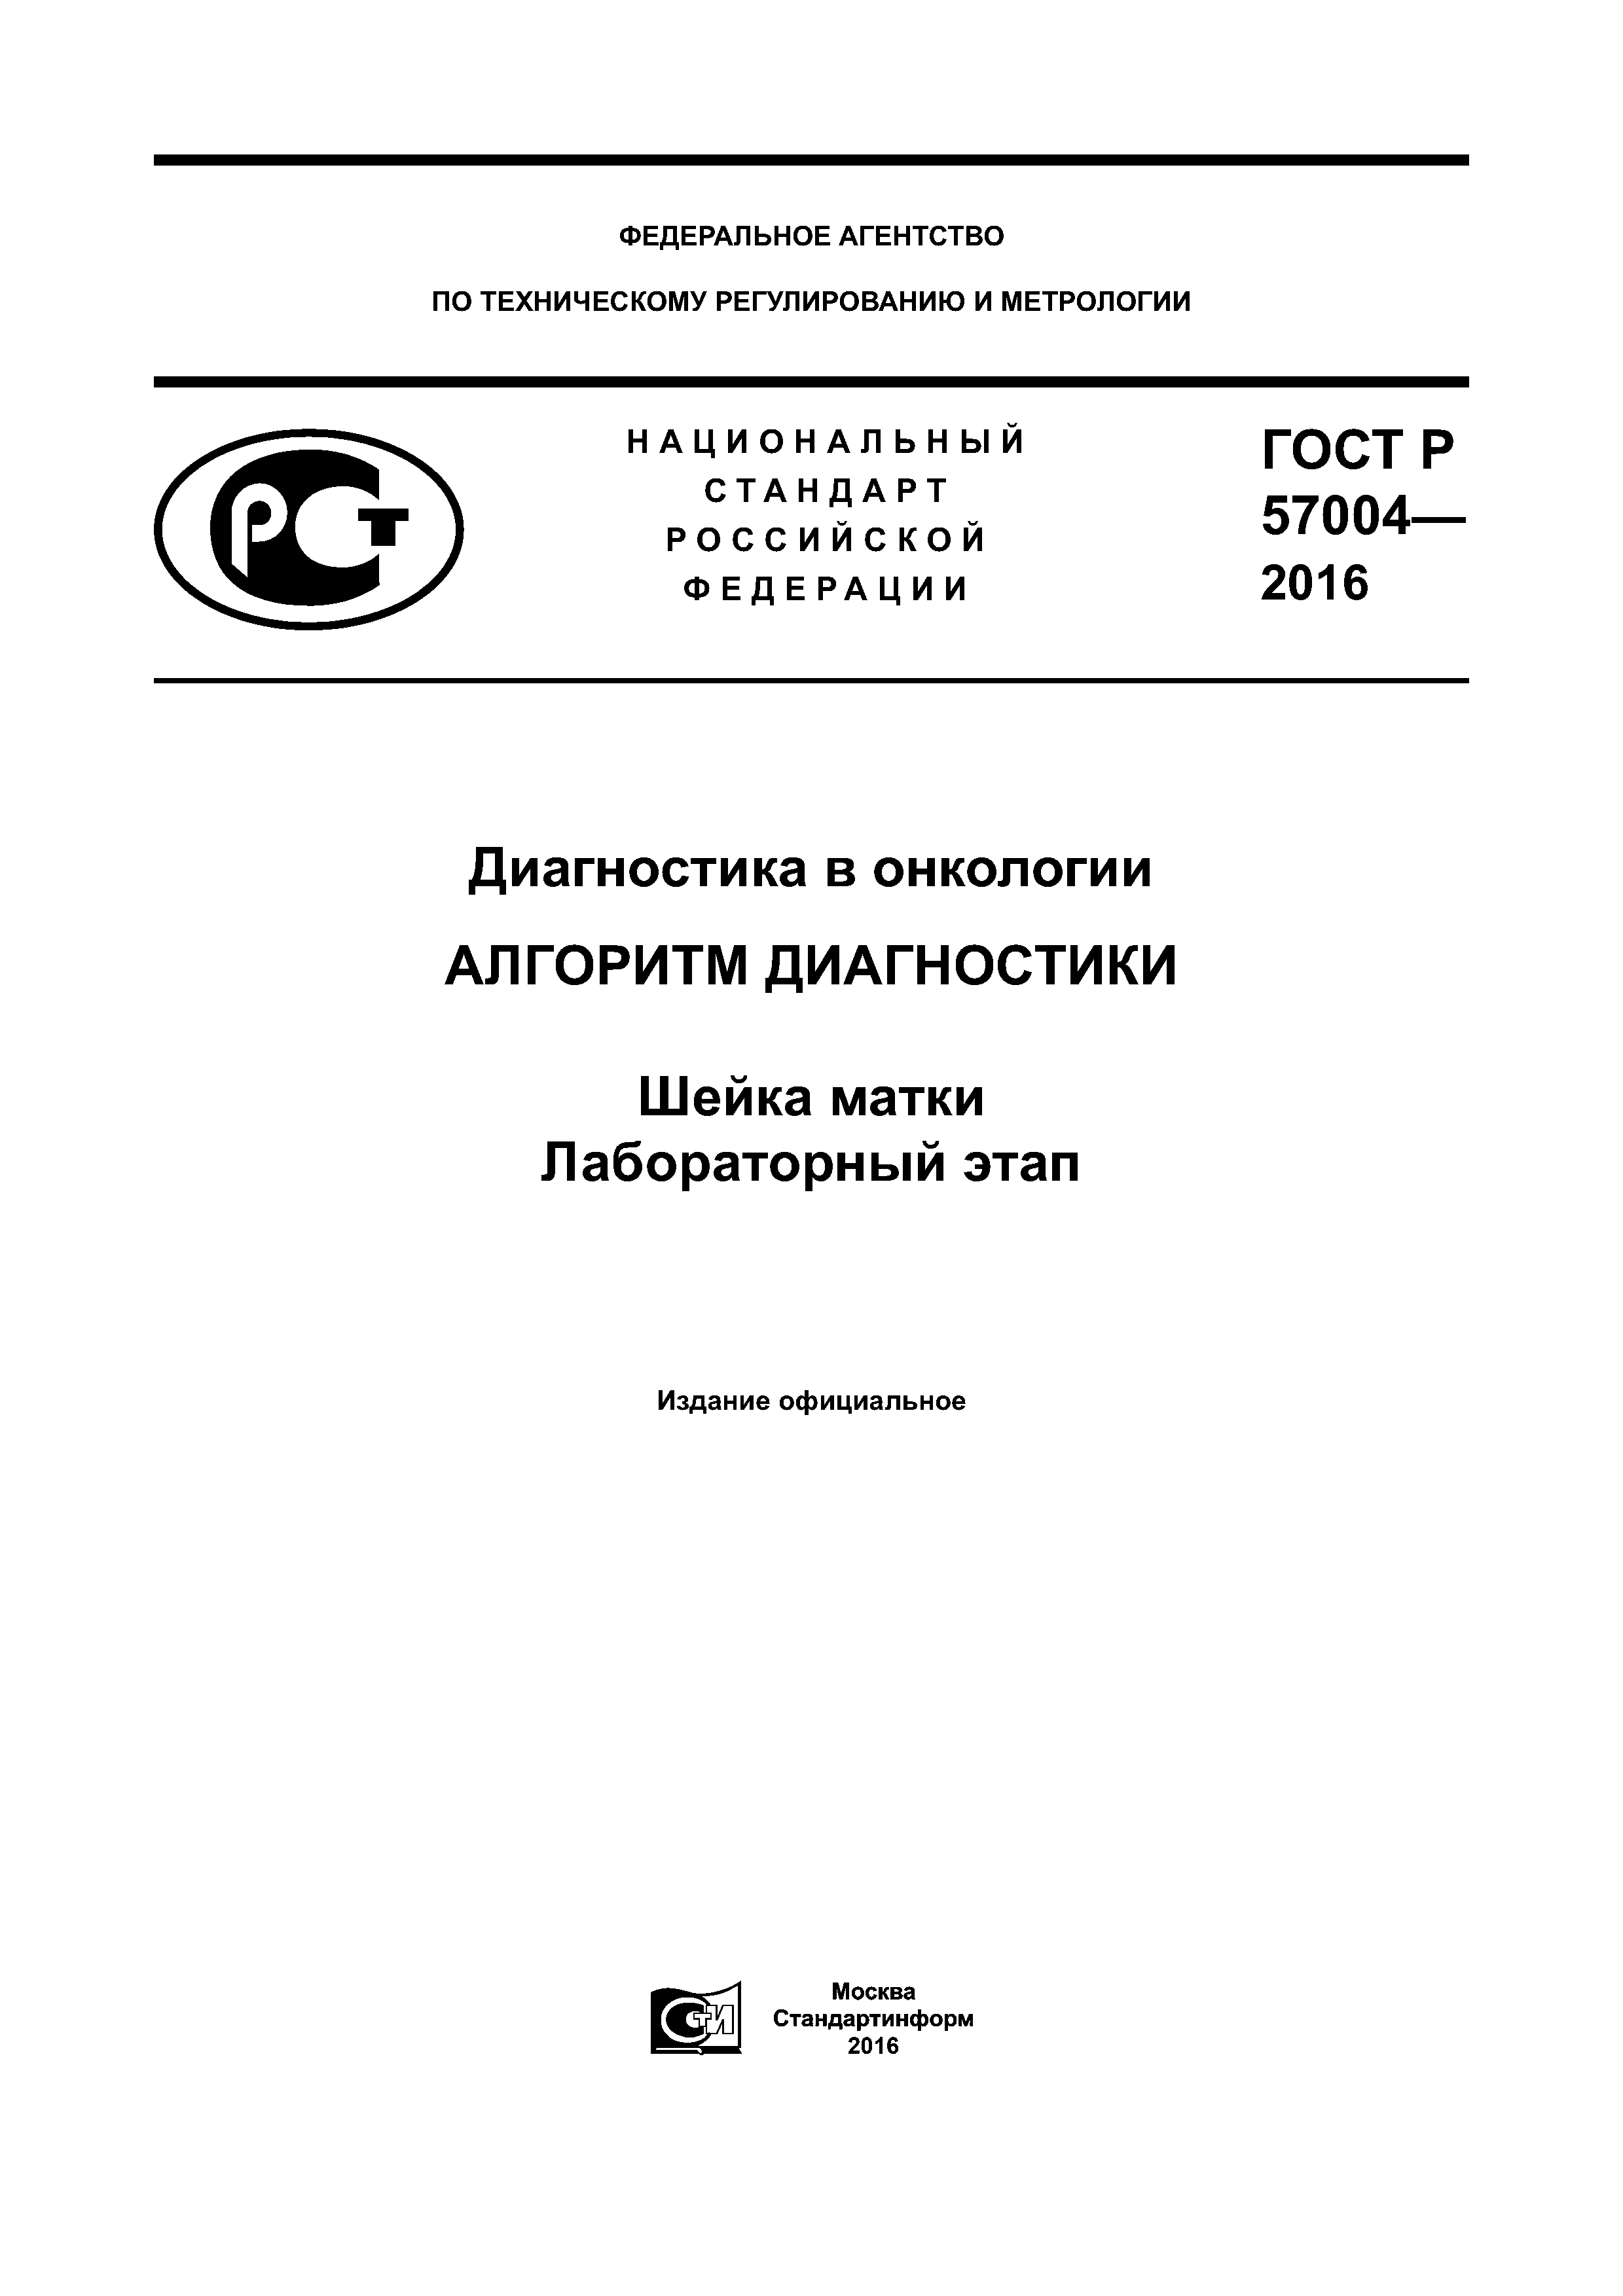 ГОСТ Р 57004-2016